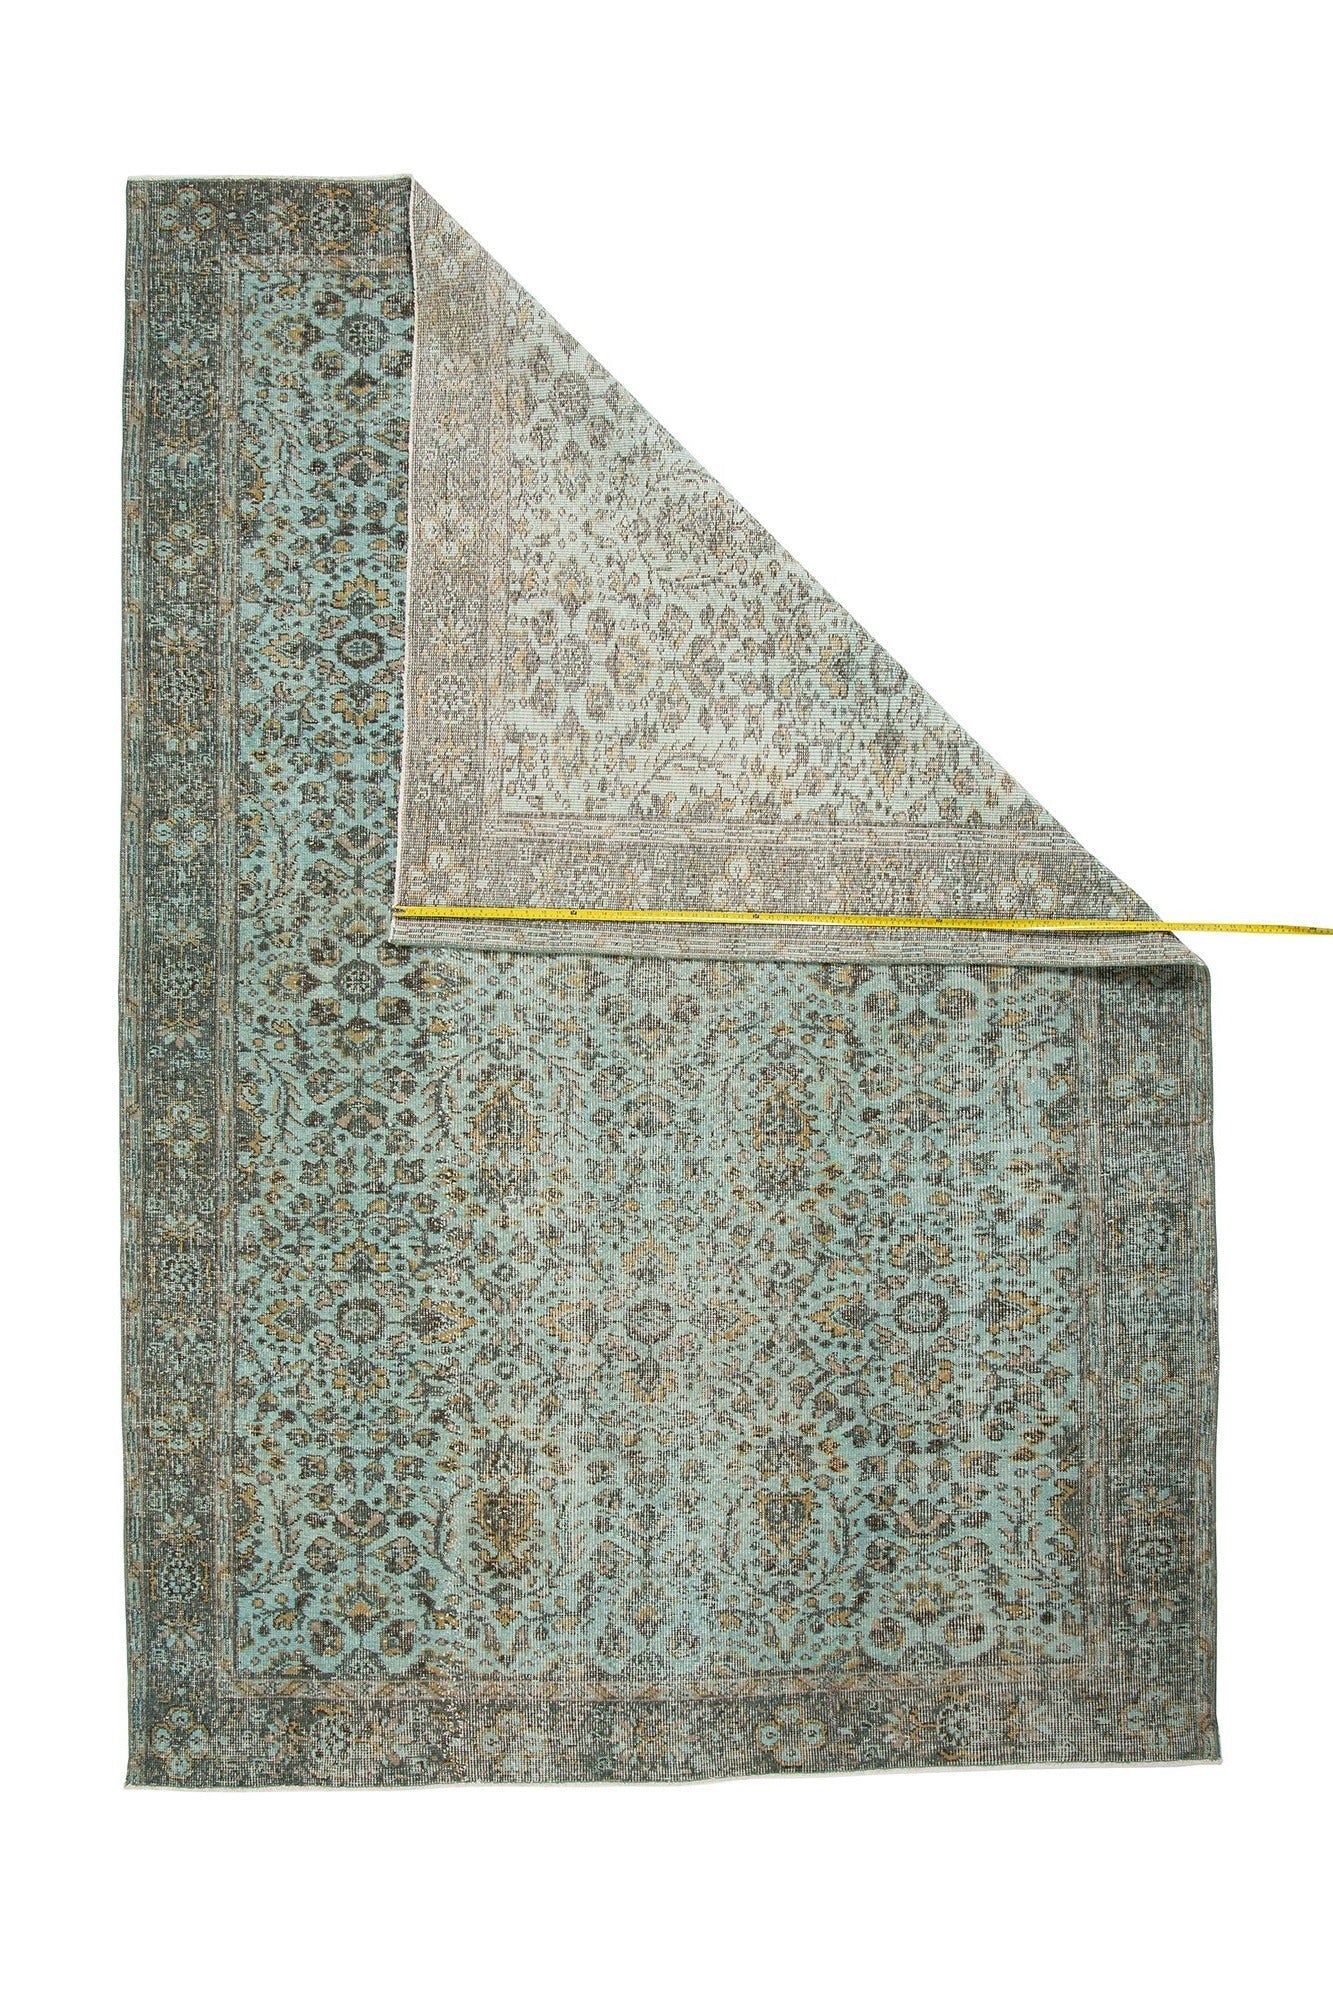 Handmade Turkish Vintage Wool Carpet Traditional Floral  Design product image #27556195664042